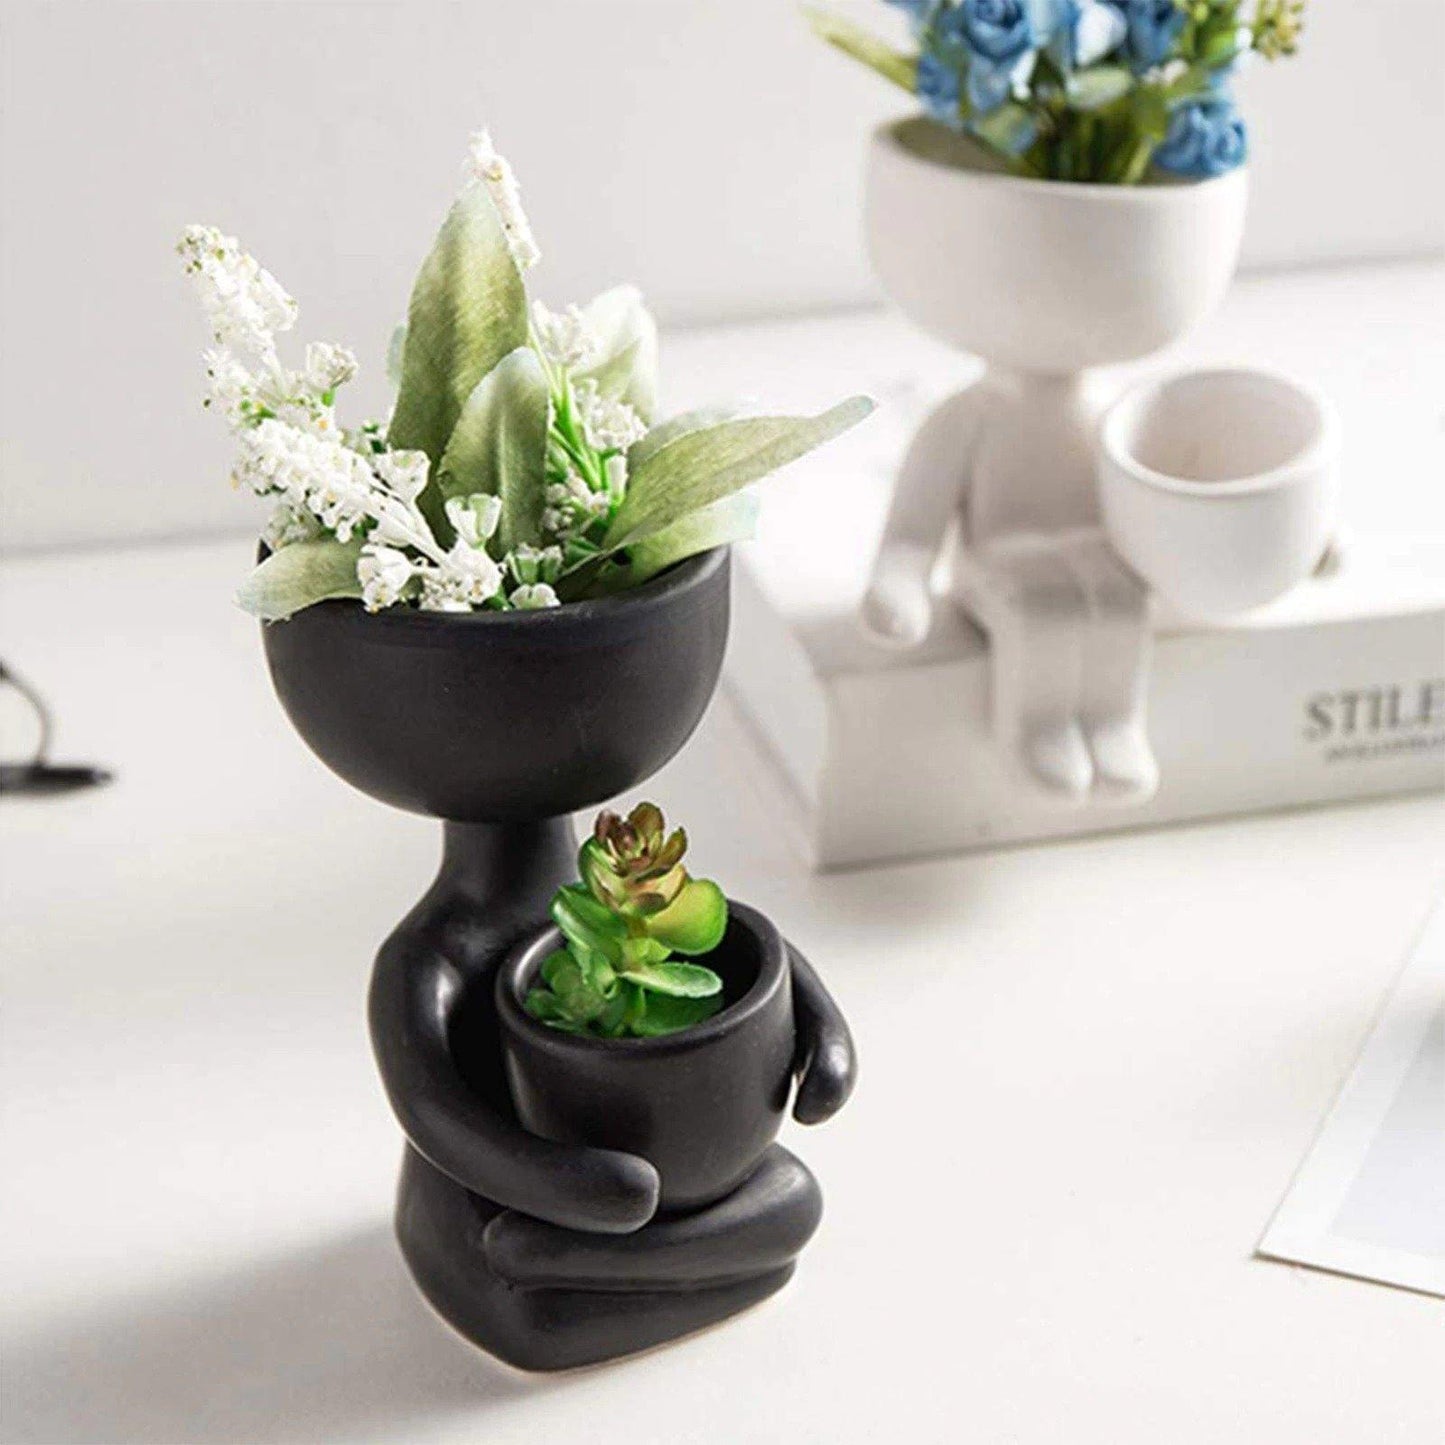 Pots & Planters Little Human Ceramic Succulent Planter sold by Fleurlovin, Free Shipping Worldwide